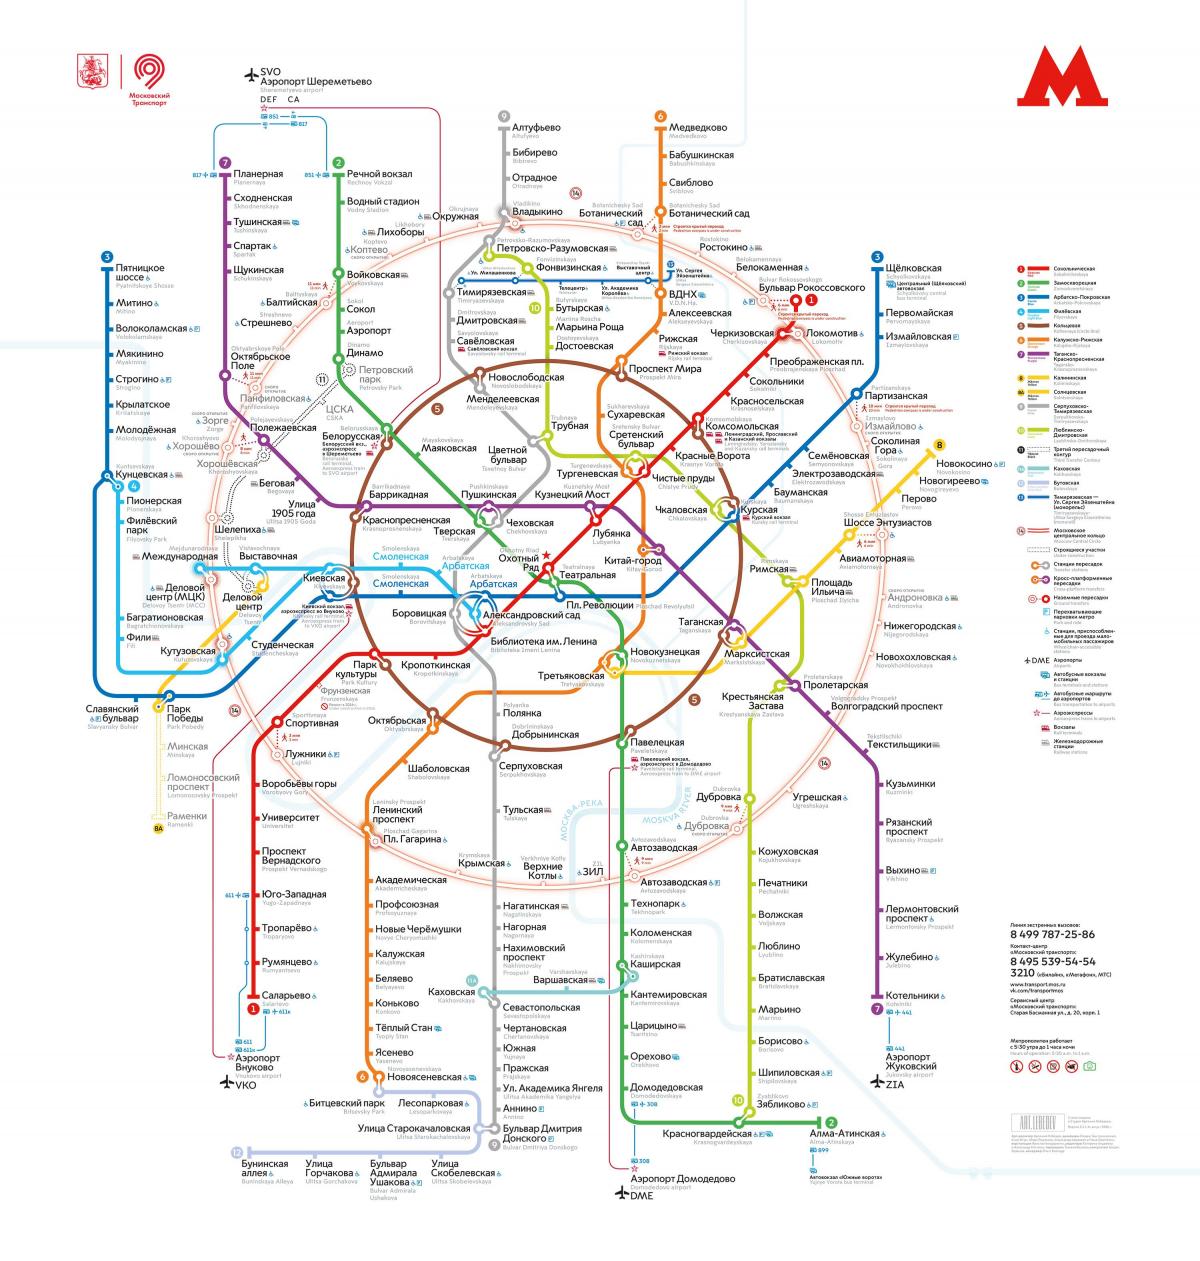 mapa del metro de Moscou